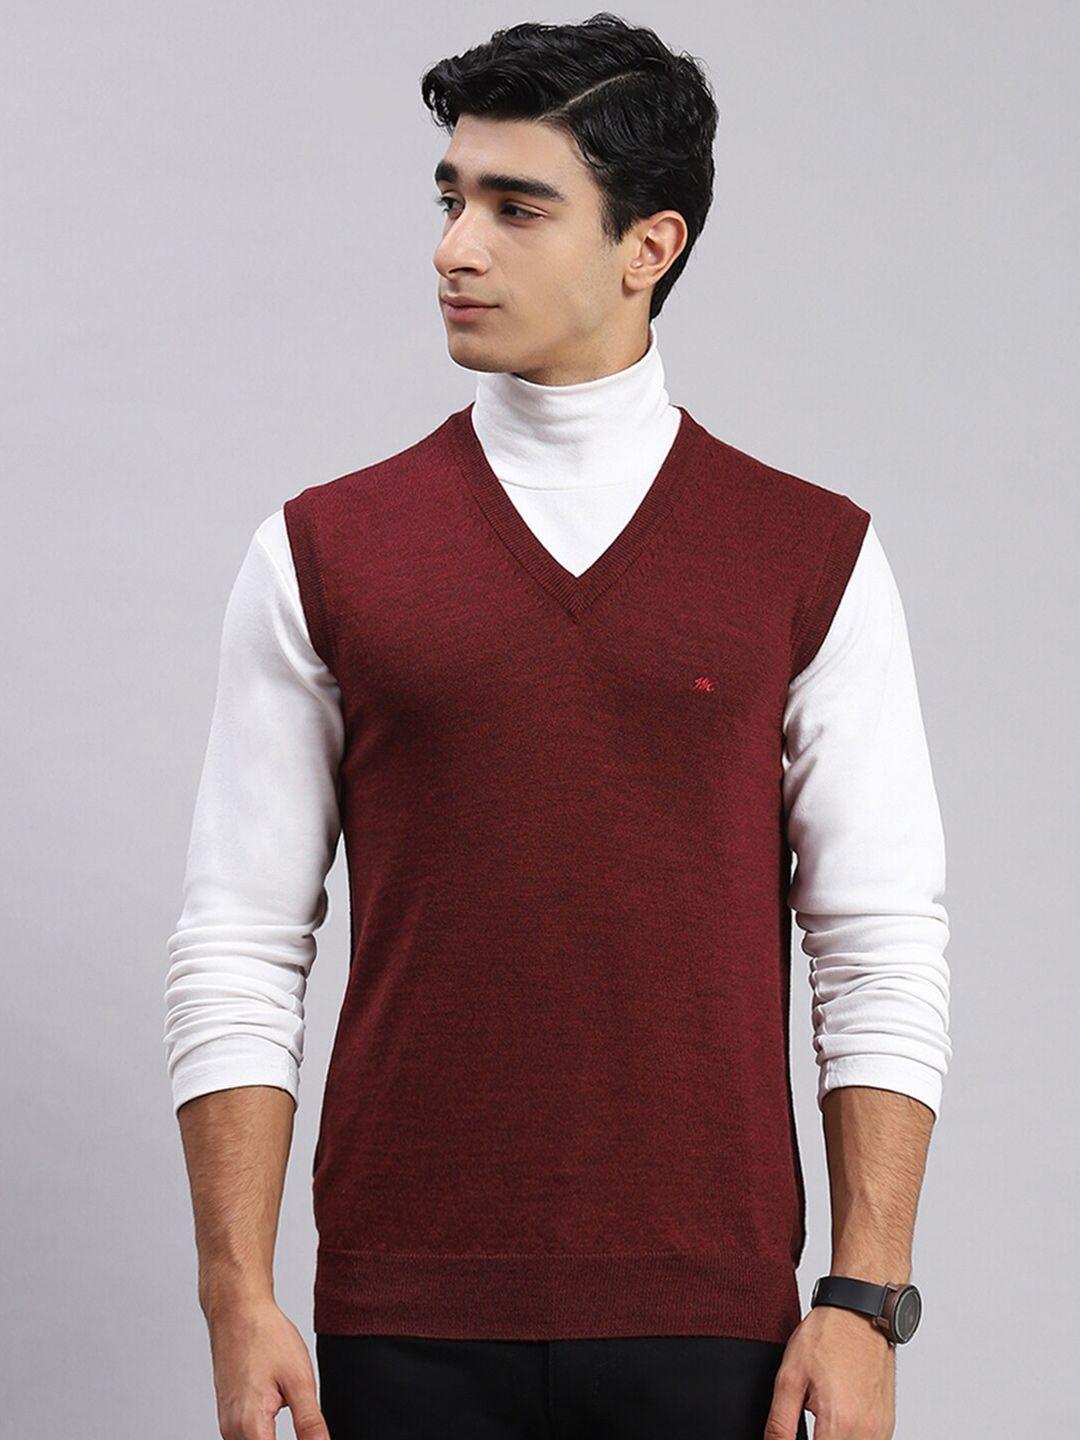 monte carlo v-neck sleeveless pure wool sweater vest